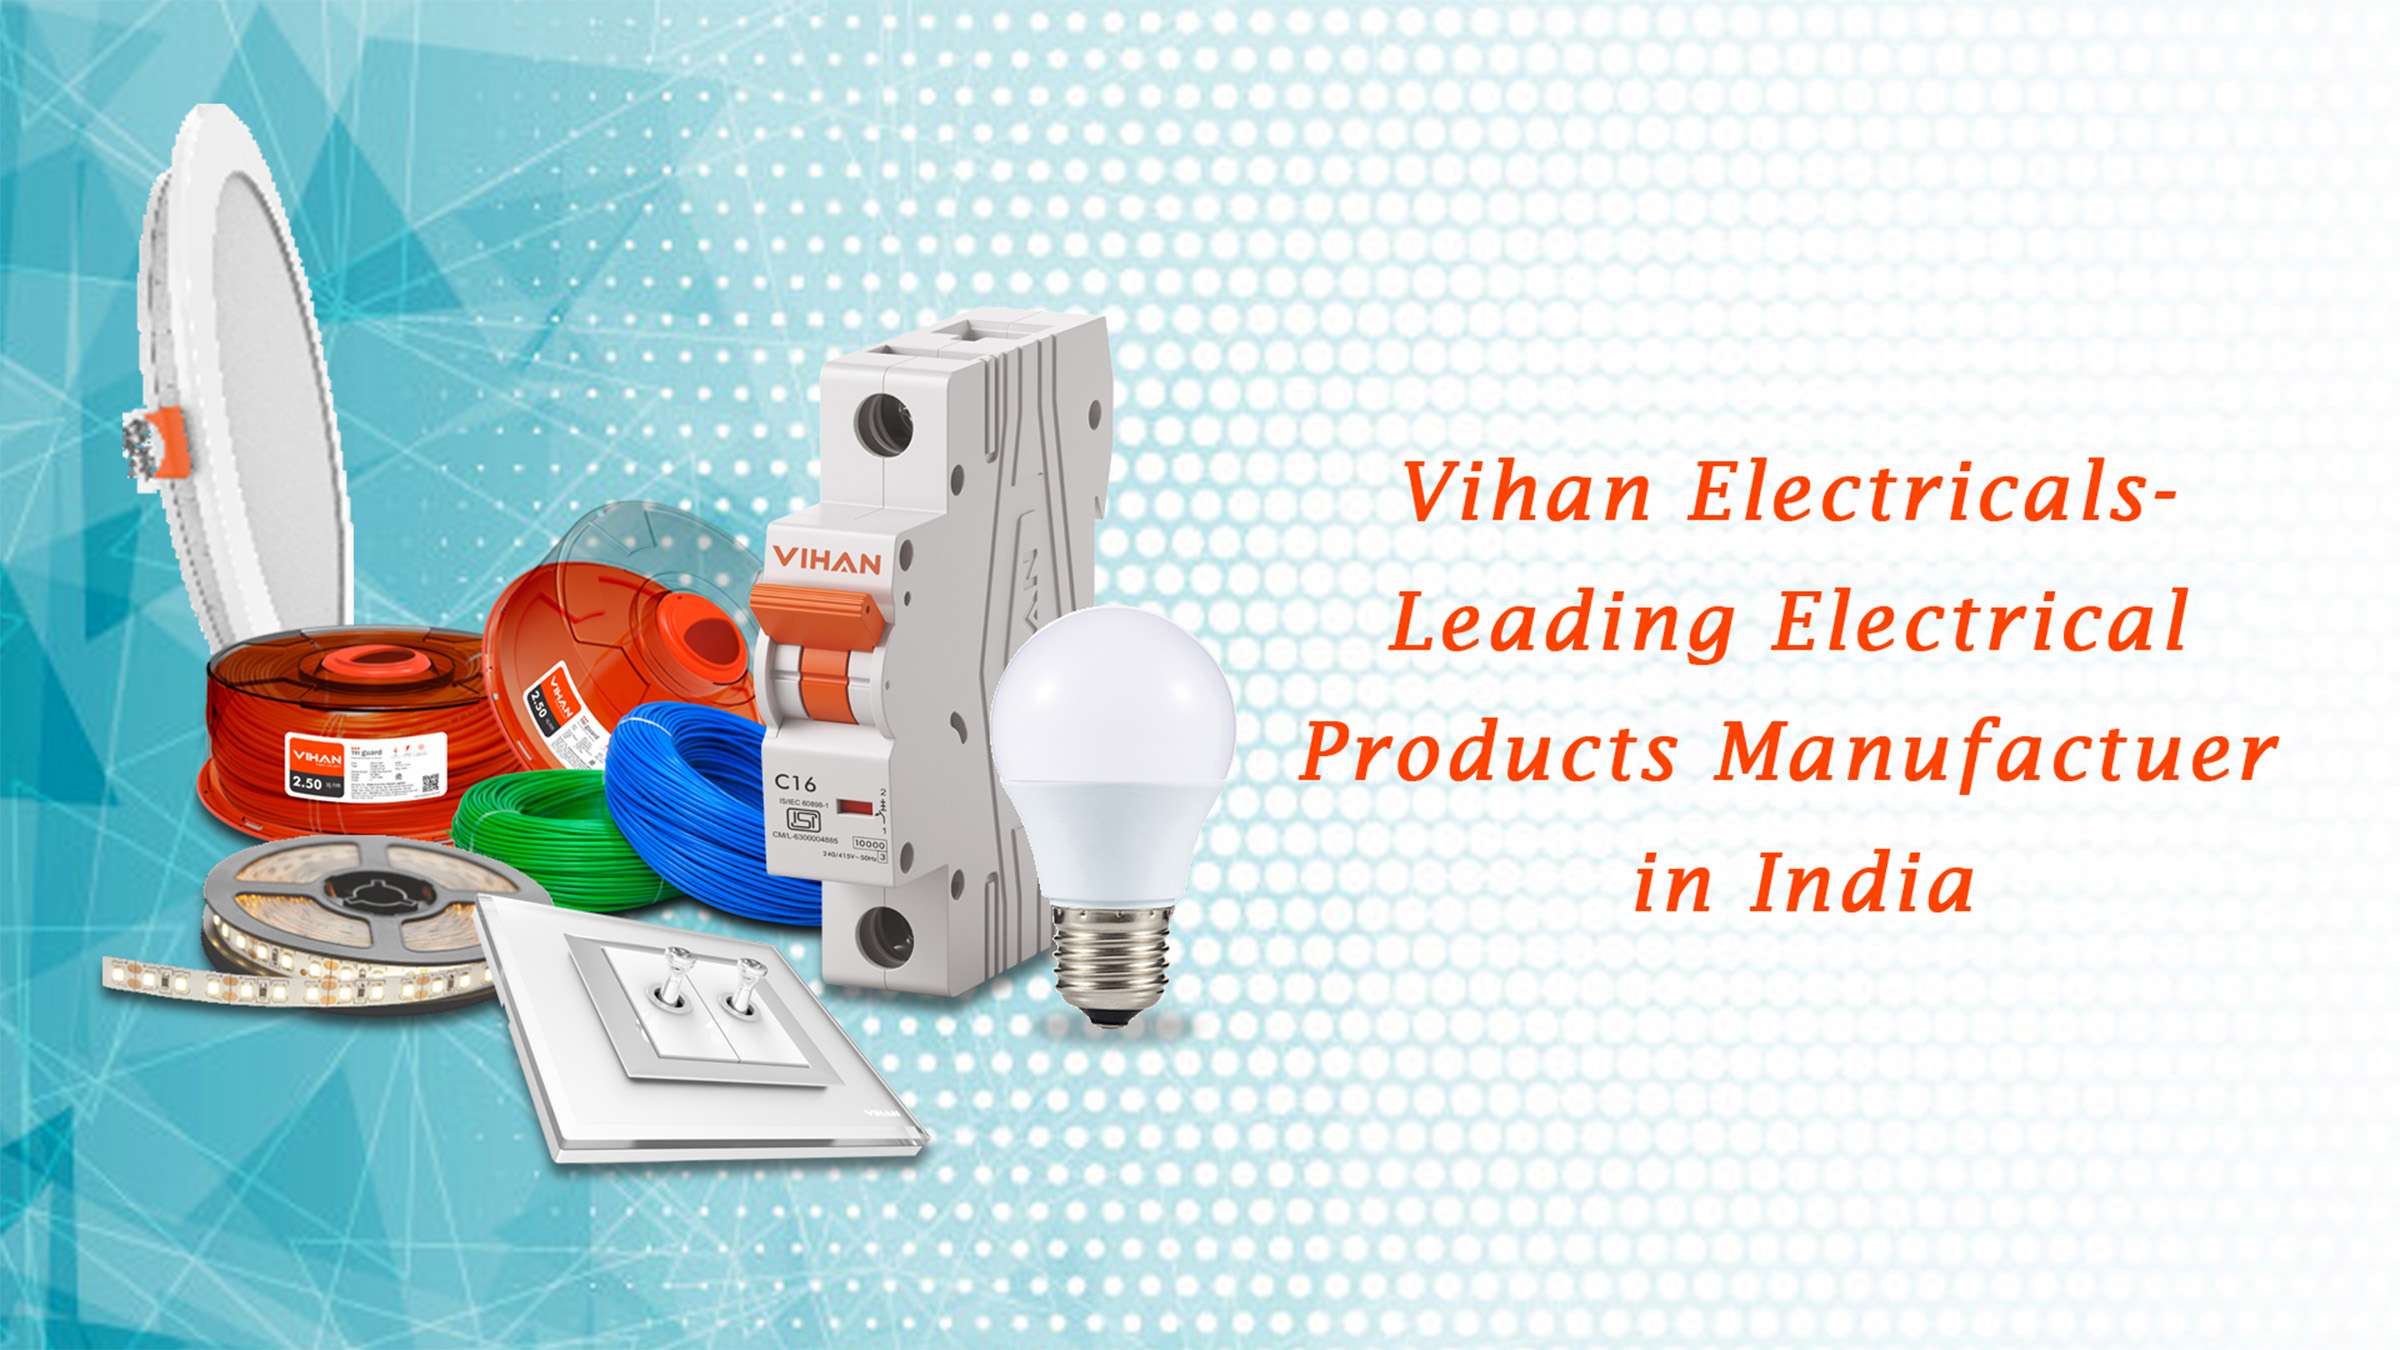 Vihan Electricals